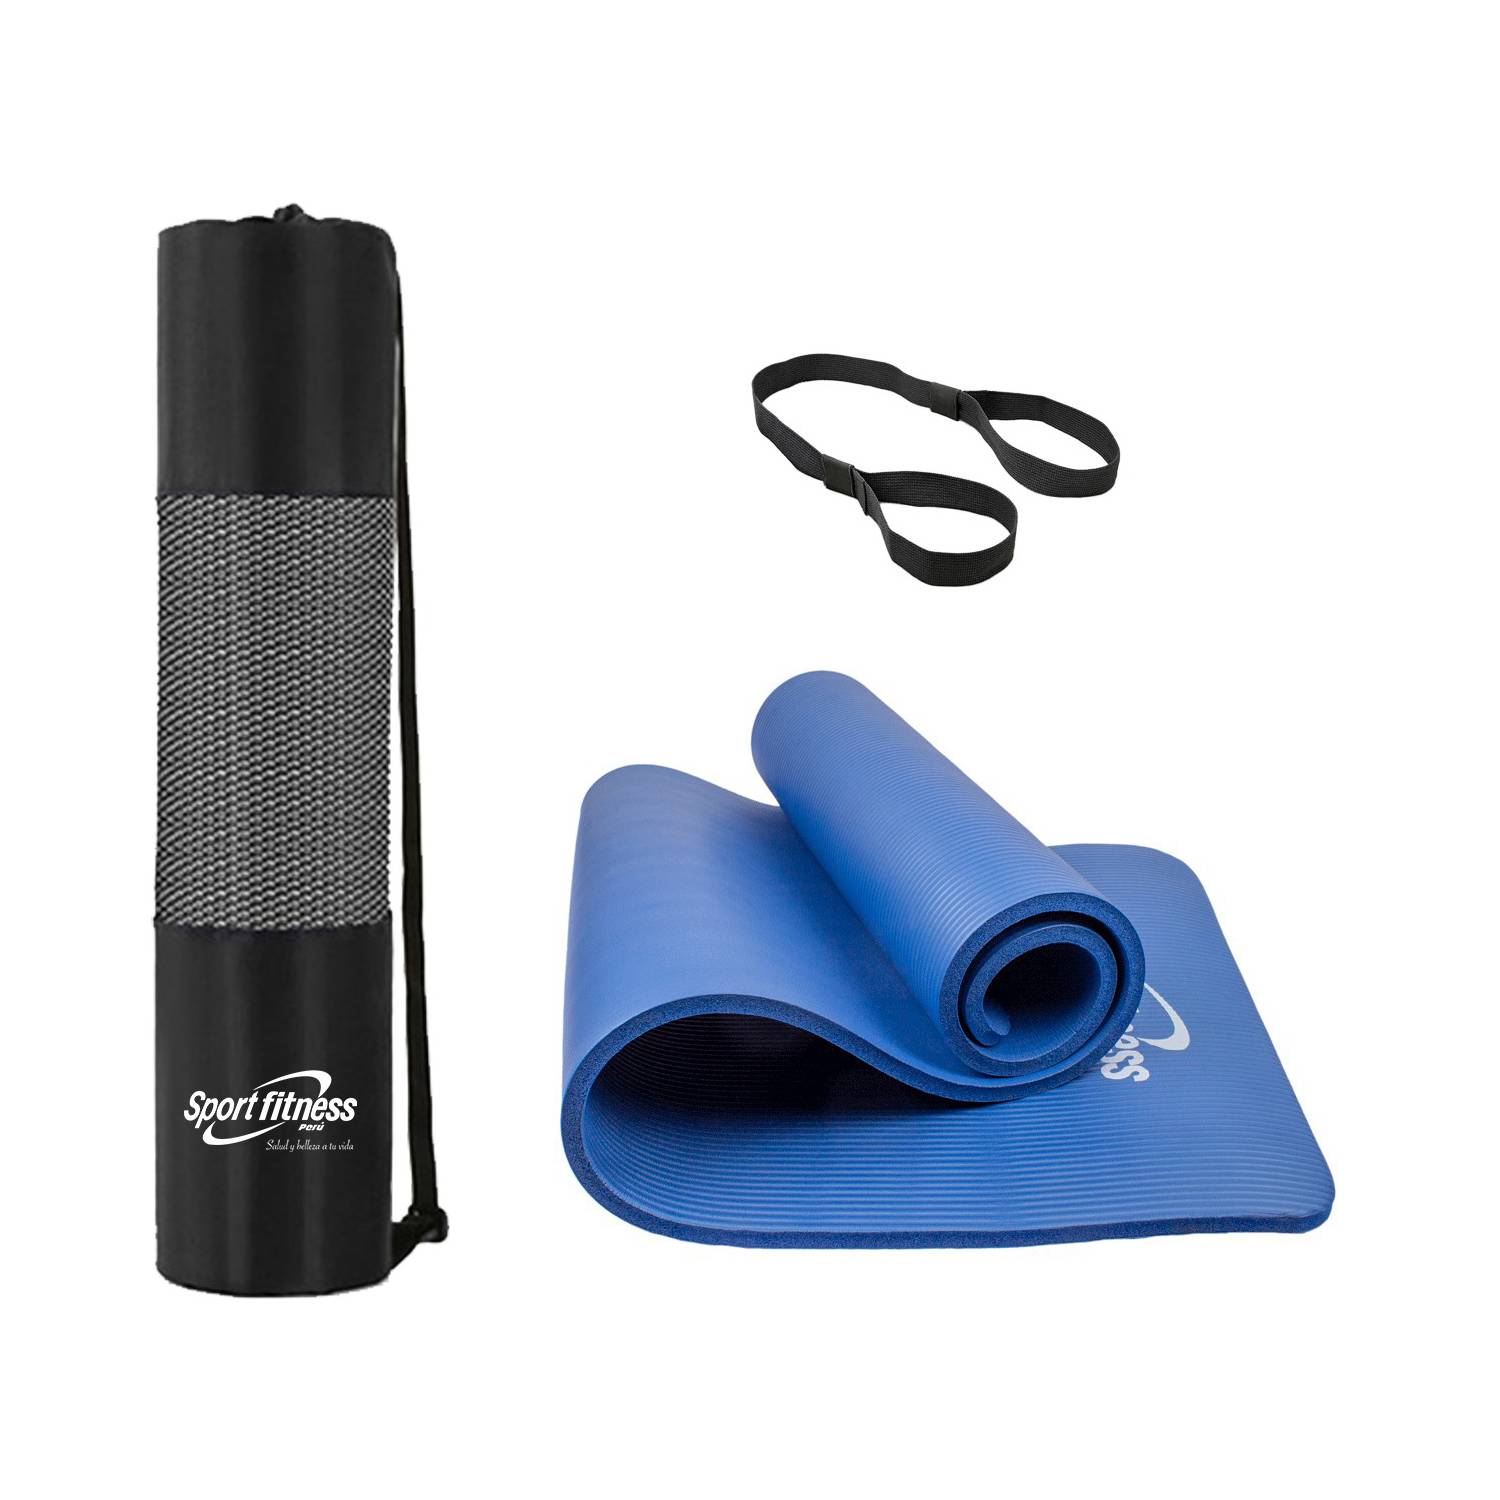 Colchoneta Plegable Yoga Mat 10mm Pilates Caucho Nbr + Bolso